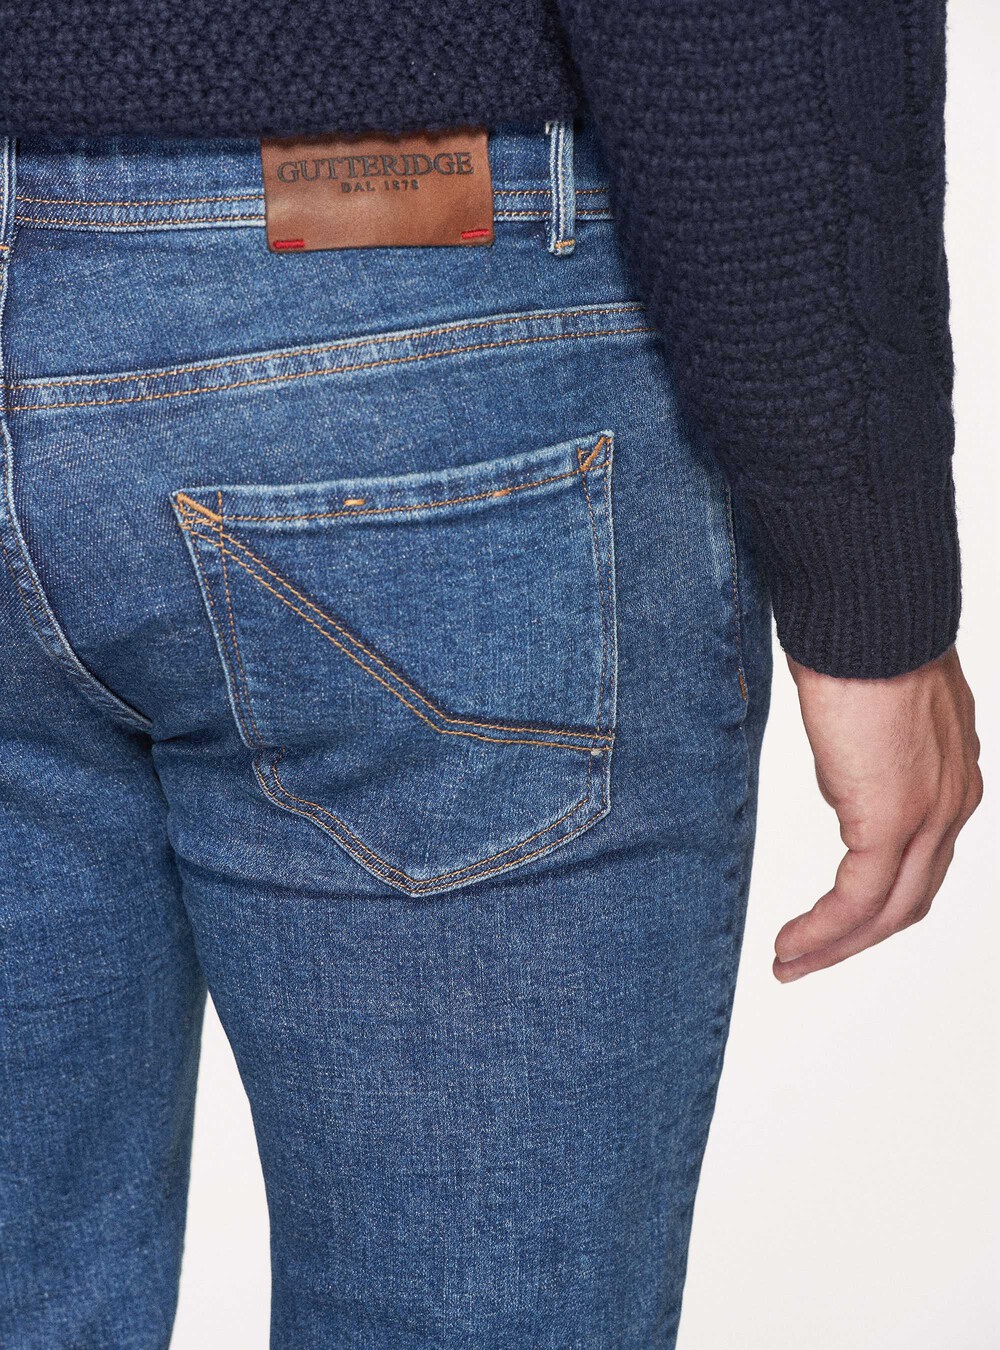 Inconcebible Empresa Superioridad Jeans Regular Fit | GutteridgeEU | Jeans Uomo